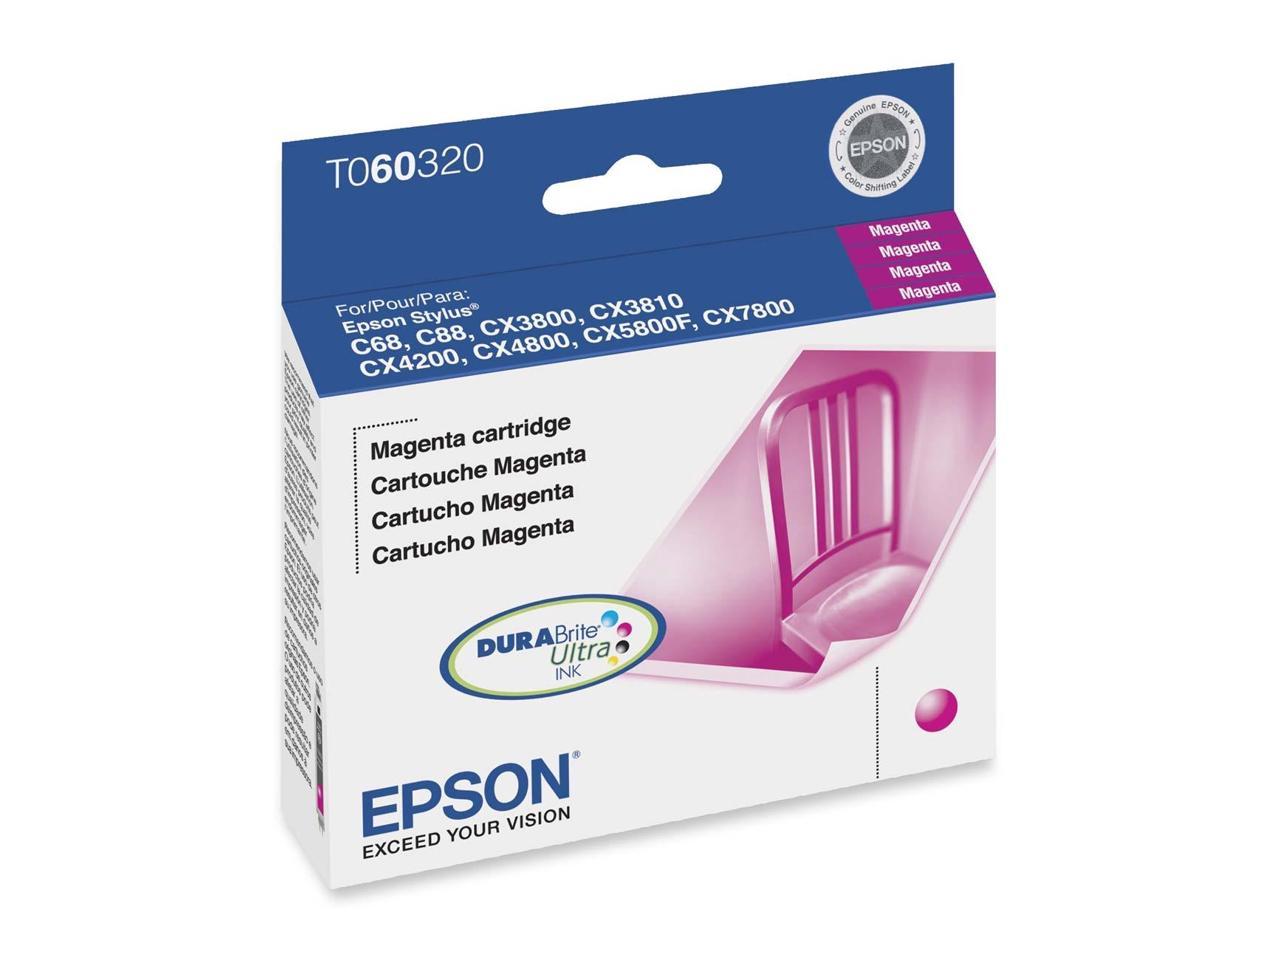 EPSON 60 (T060320) Ink Cartridges Magenta